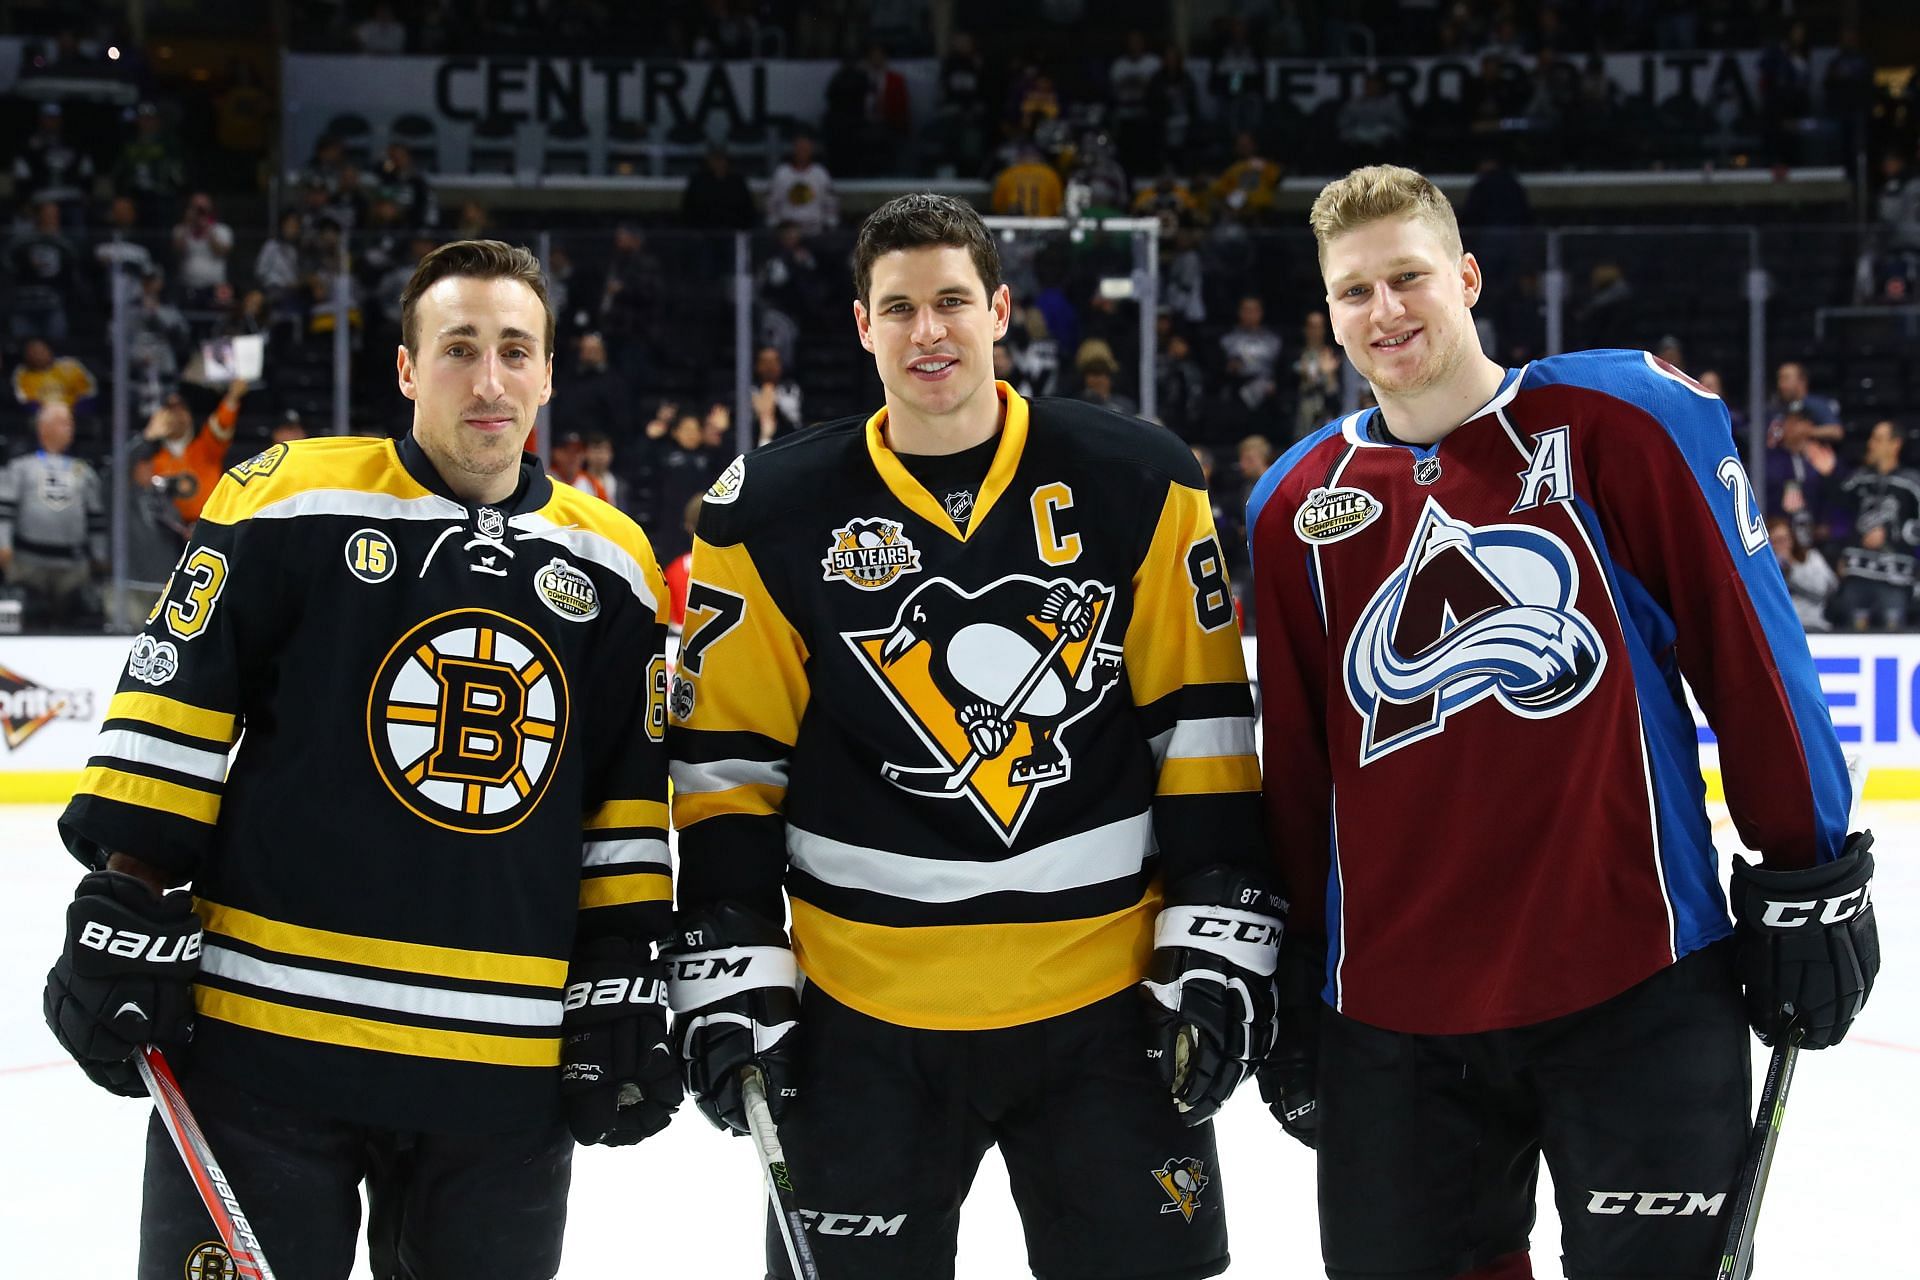 Nova Scotia NHLers Brad Marchand, Sidney Crosby and Nathan MacKinnon